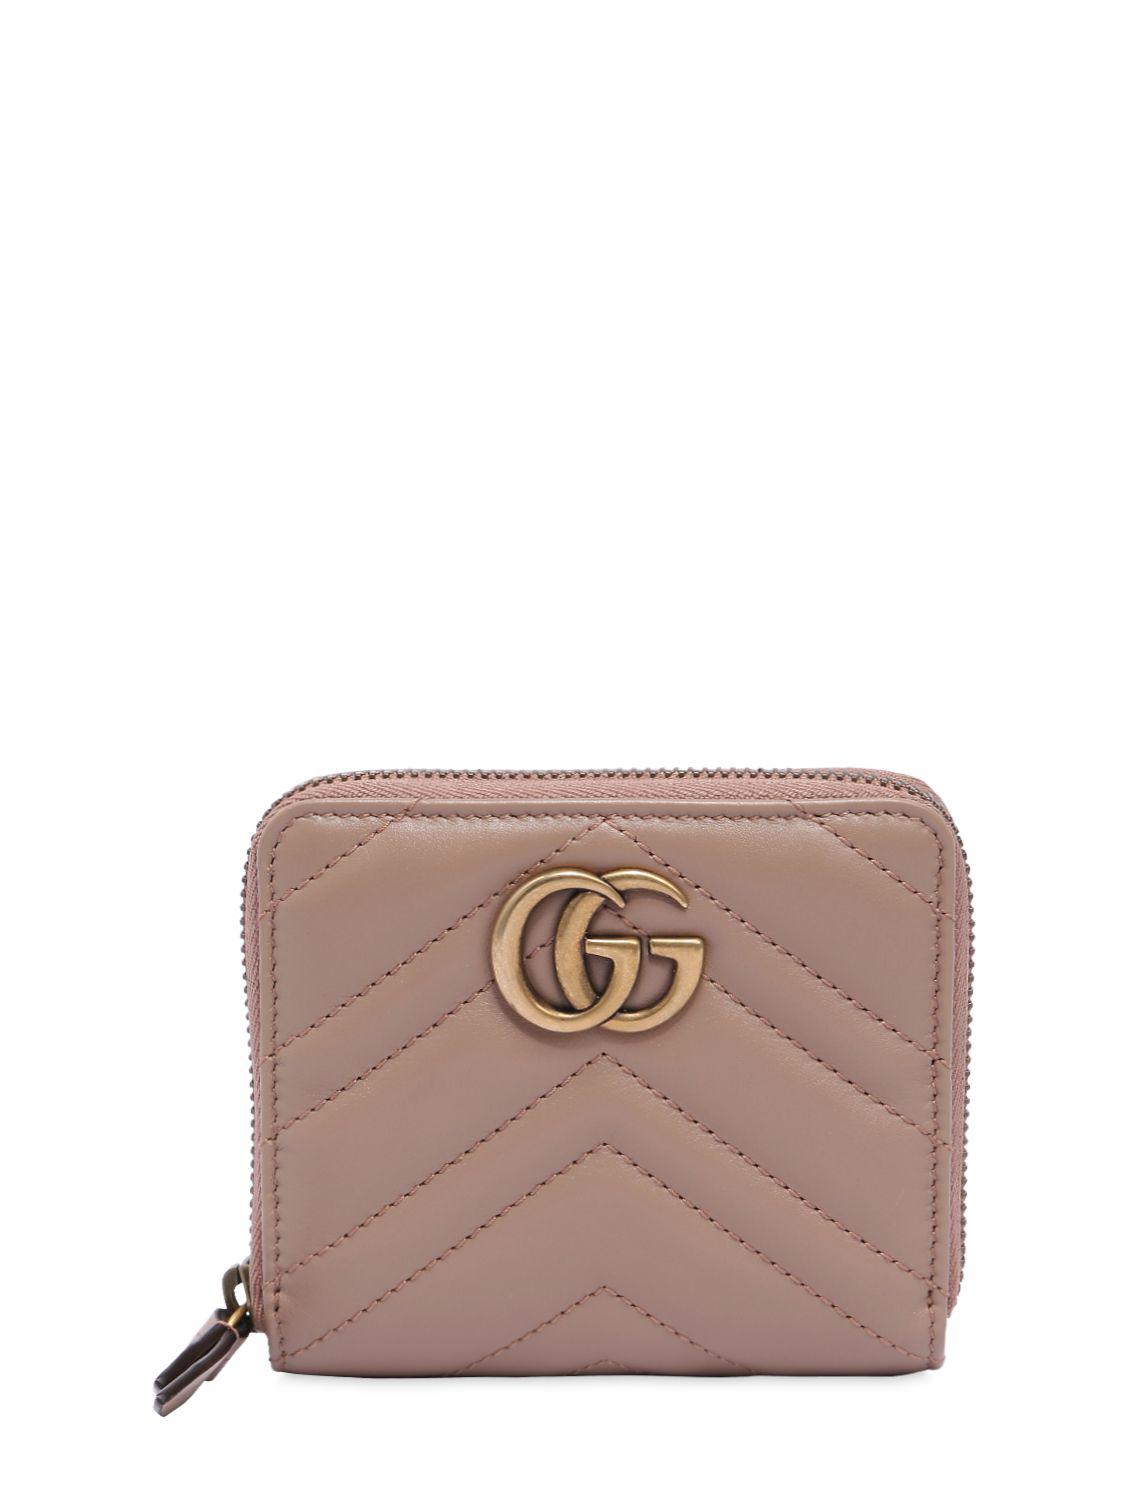 gucci small pink wallet